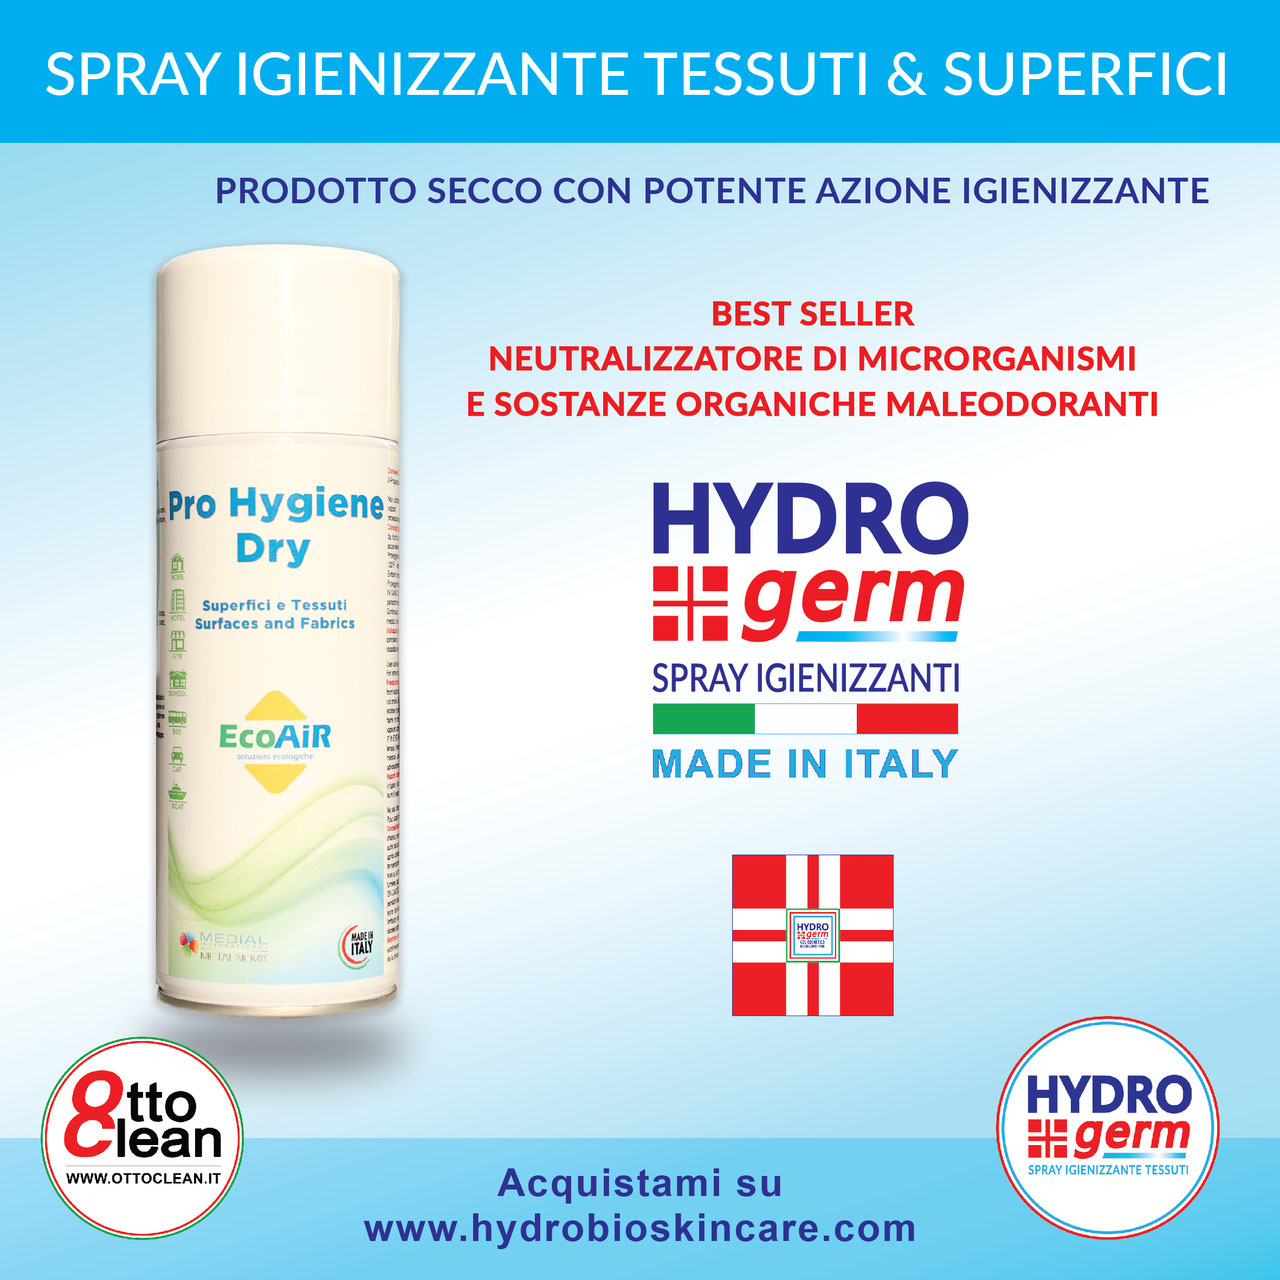 Spray igienizzante tessuti e superfici, potente Pro mangiaodori -  Hydrobioskincare cosmetics